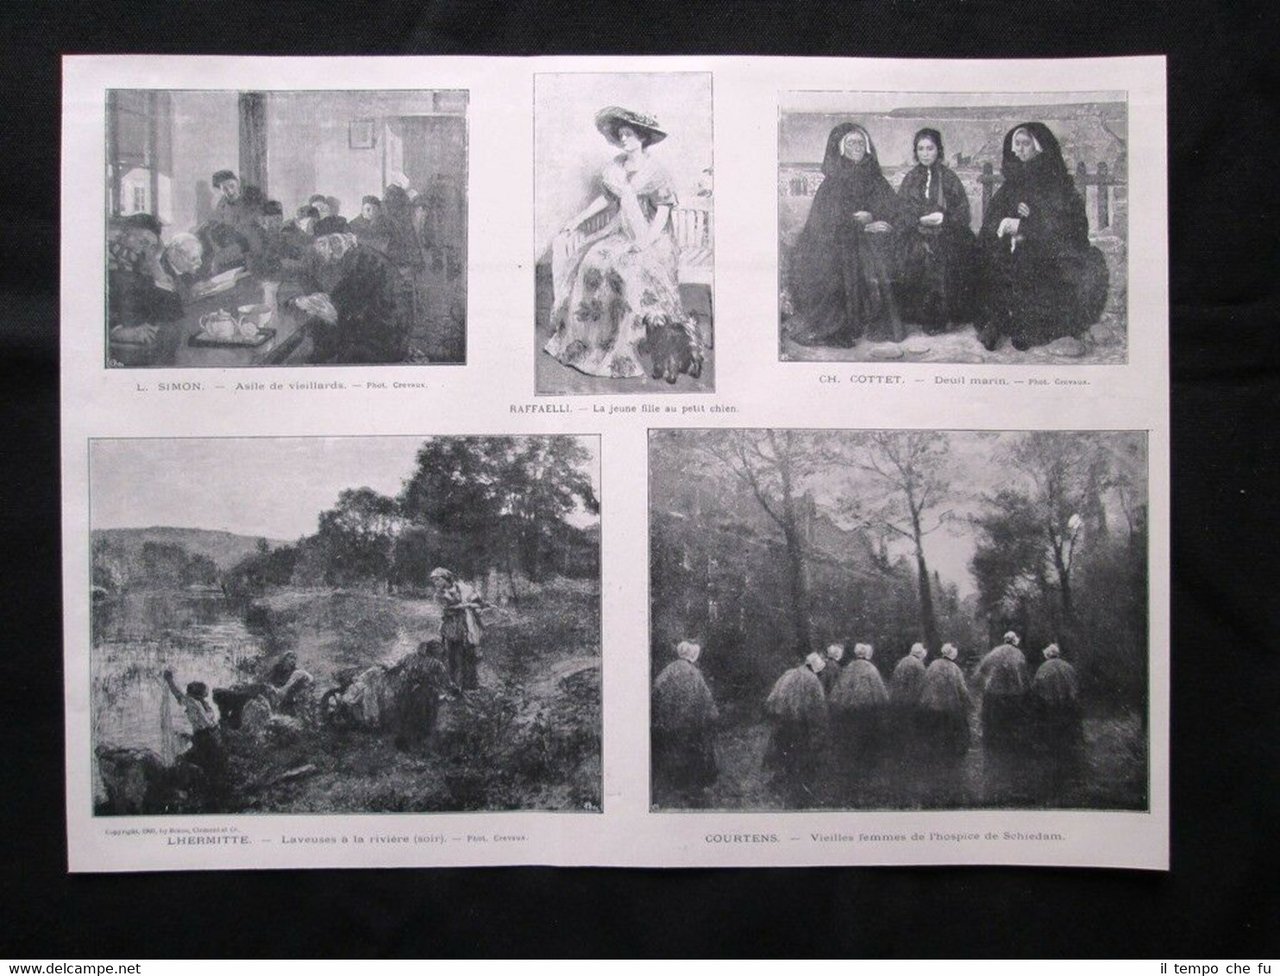 Simon, Raffaelli, Cottet, Lhermitte + Truchet, Bellan Stampa del 1903